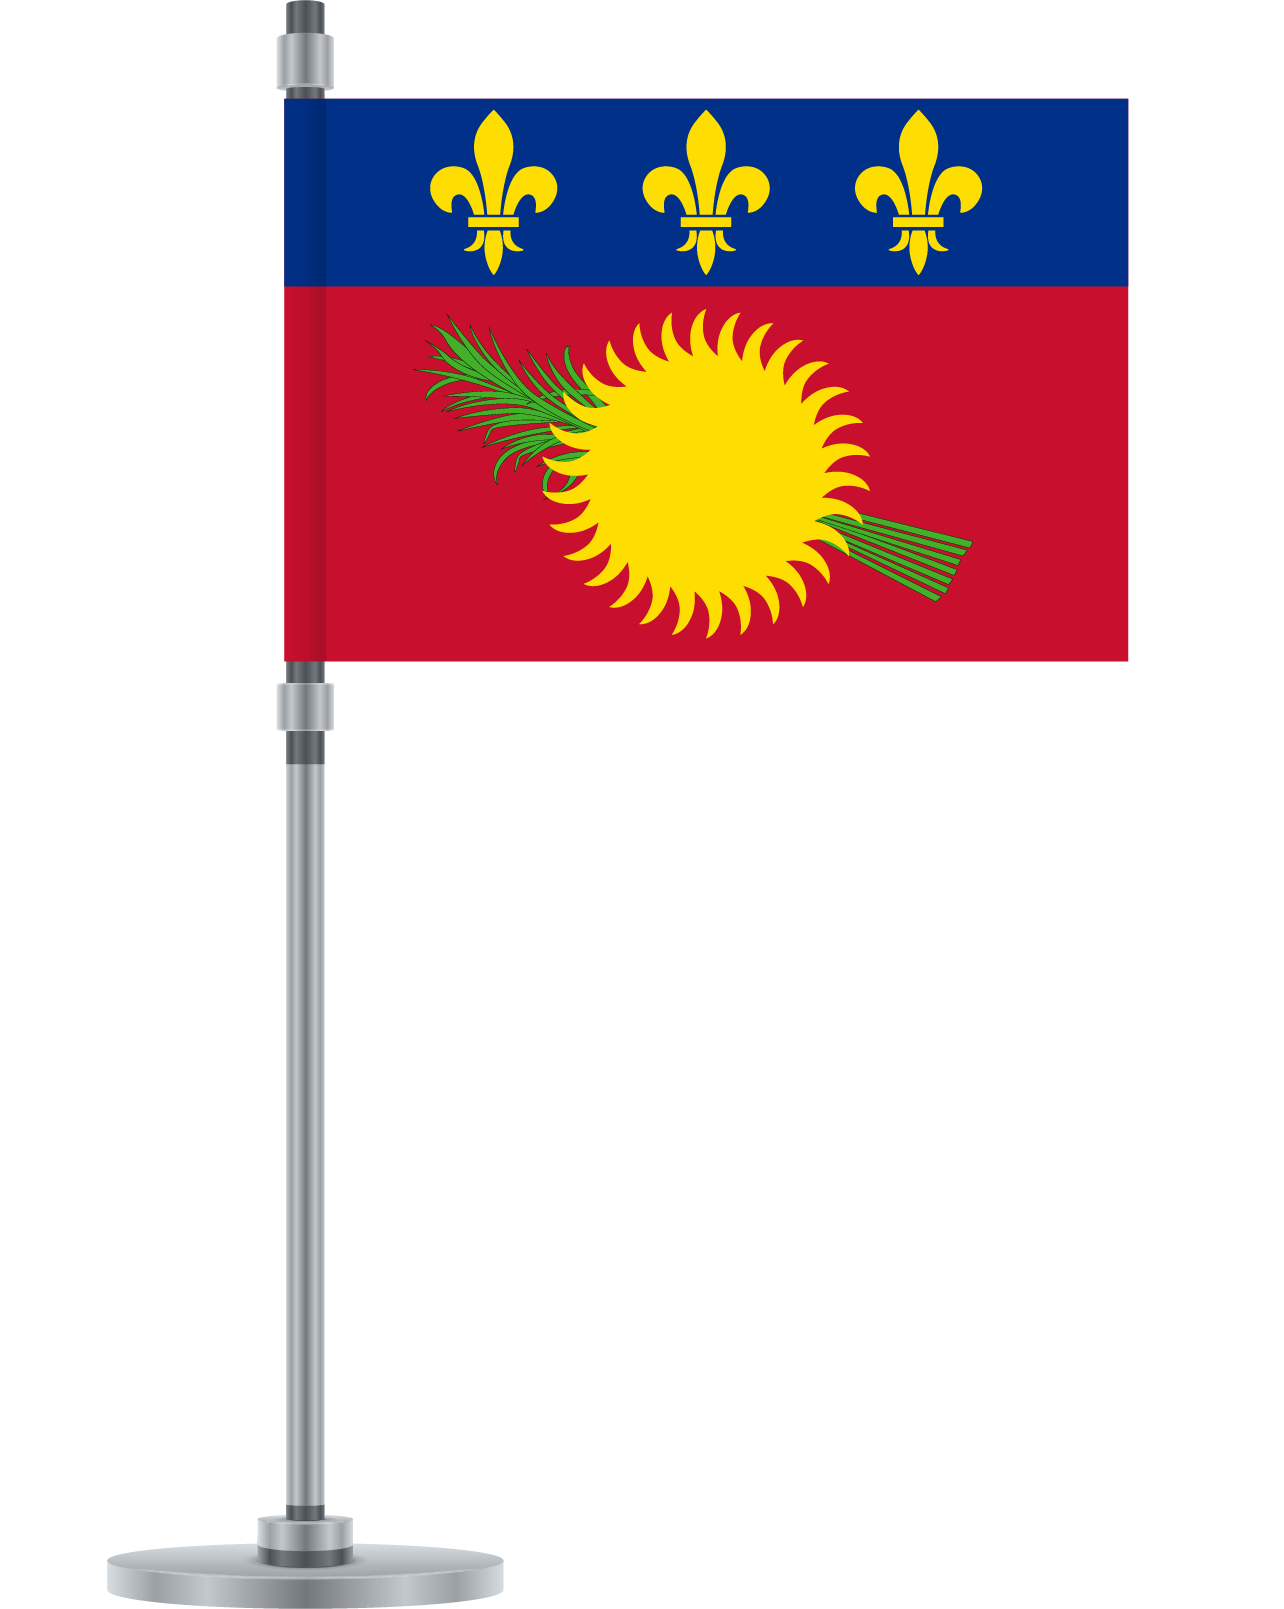 Guadeloupe flag